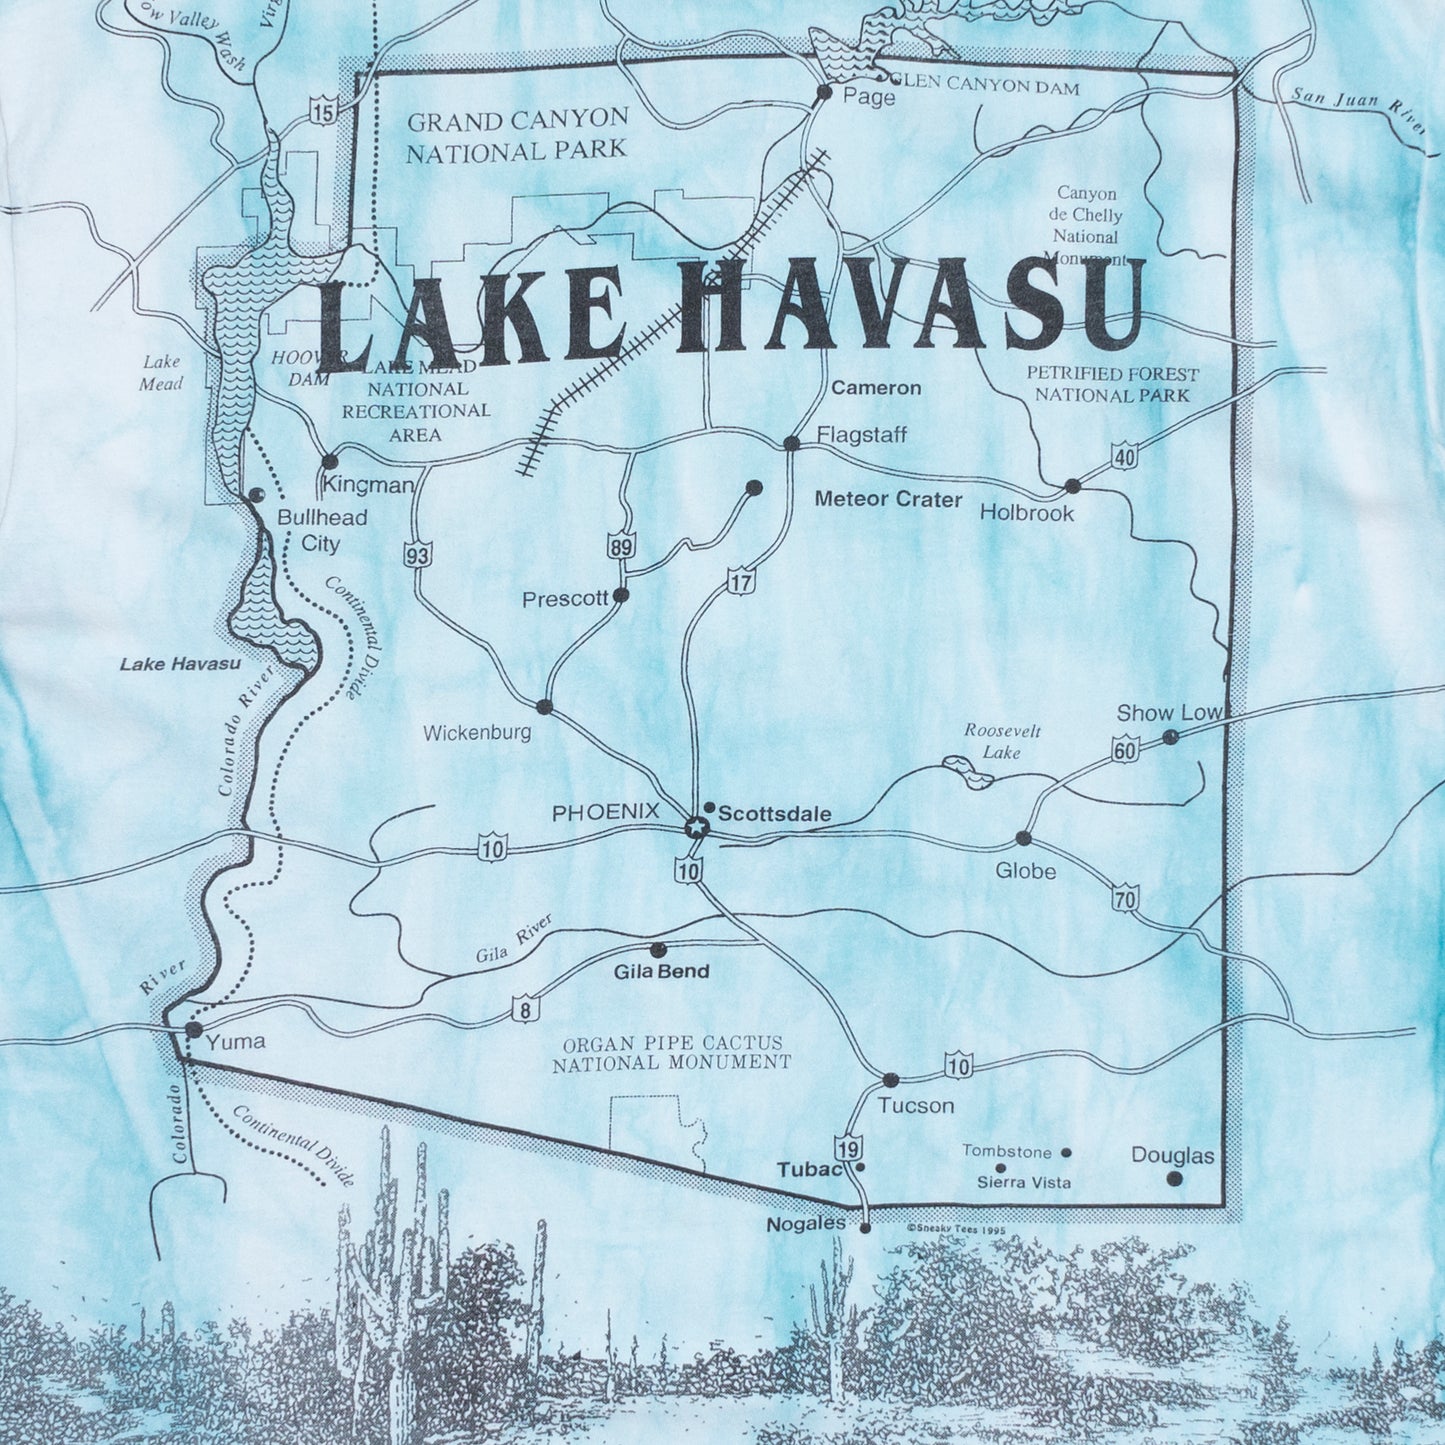 Lake Havasu AOP T Shirt, XL